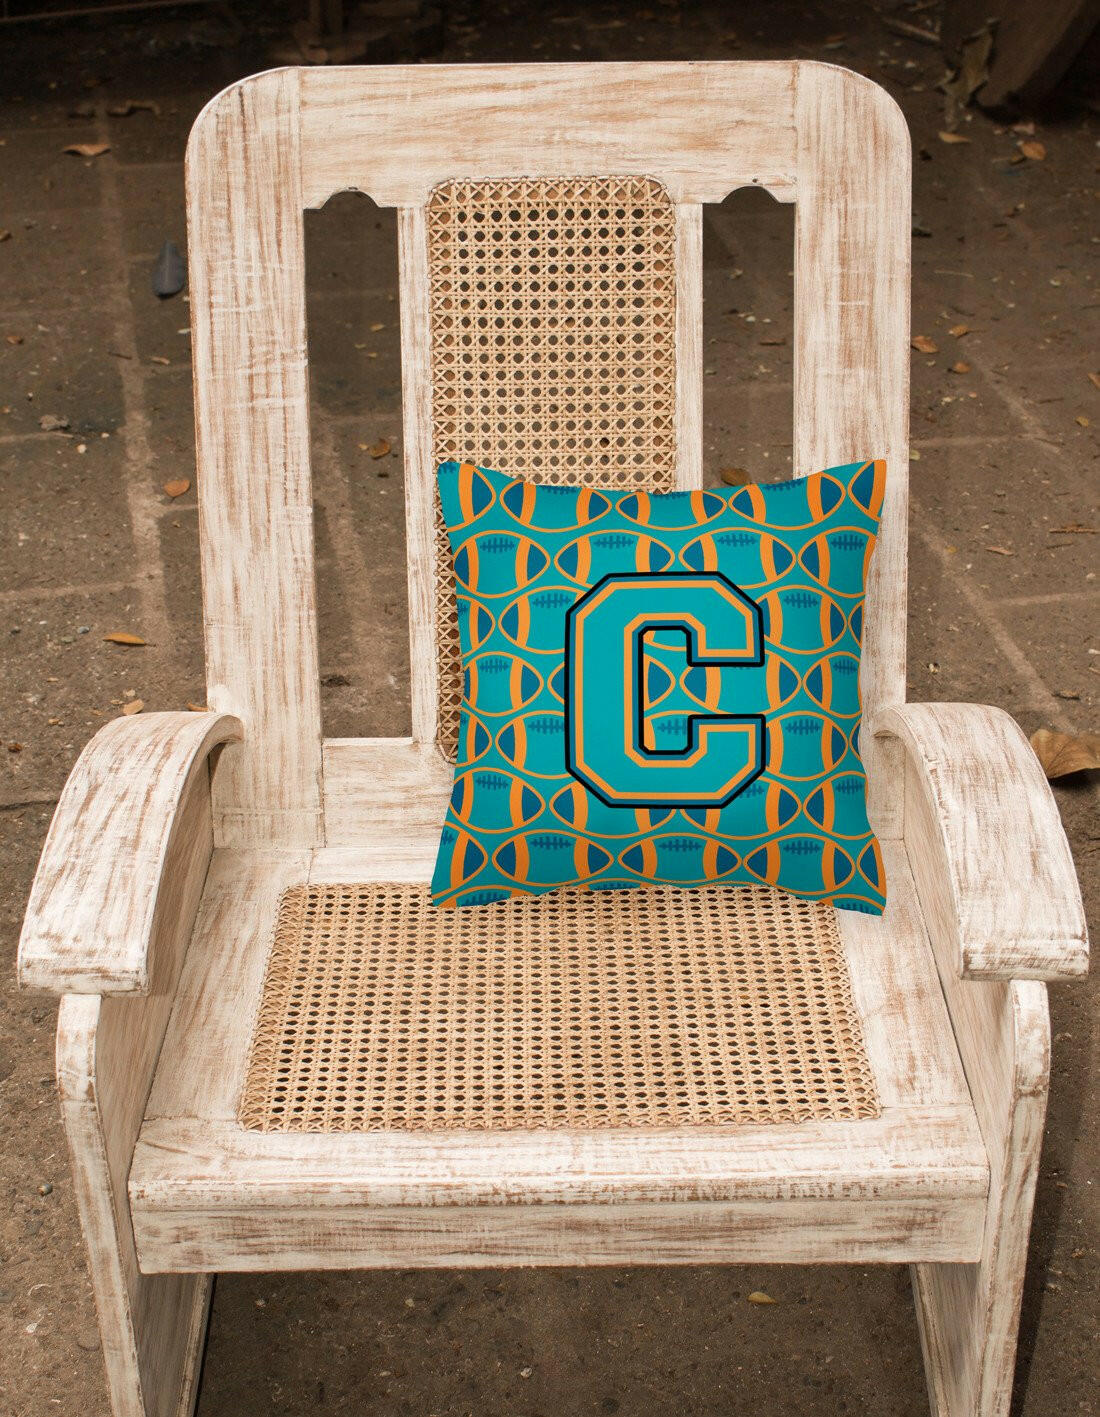 Letter C Football Aqua, Orange and Marine Blue Fabric Decorative Pillow CJ1063-CPW1414 by Caroline's Treasures